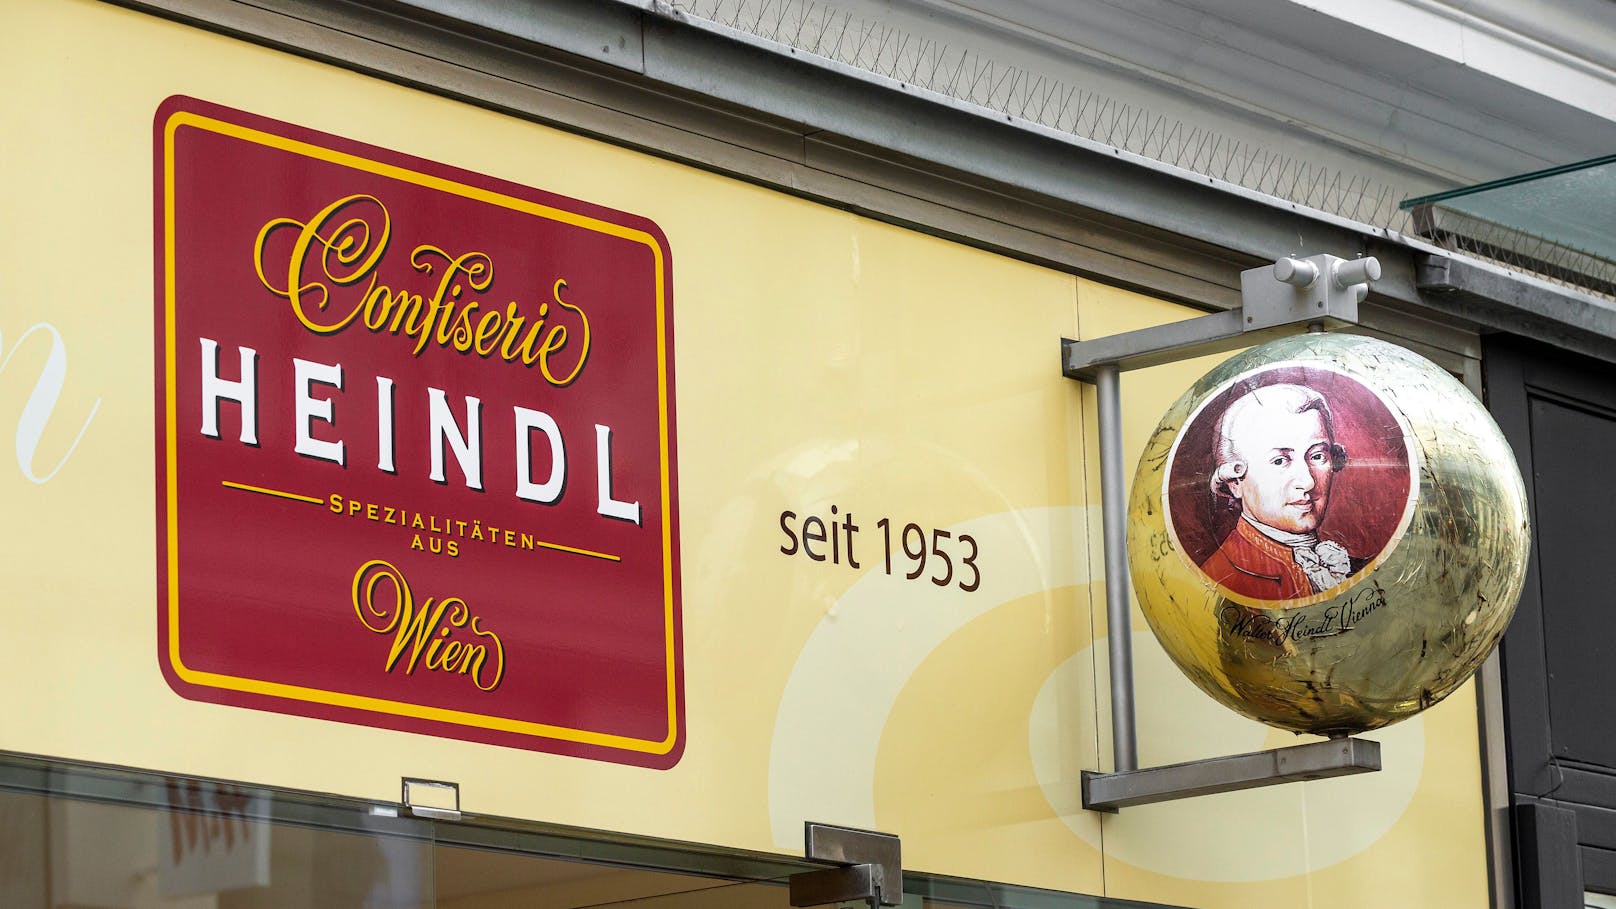 Die Wiener Confiserie Heindl muss nun die Preise anziehen.